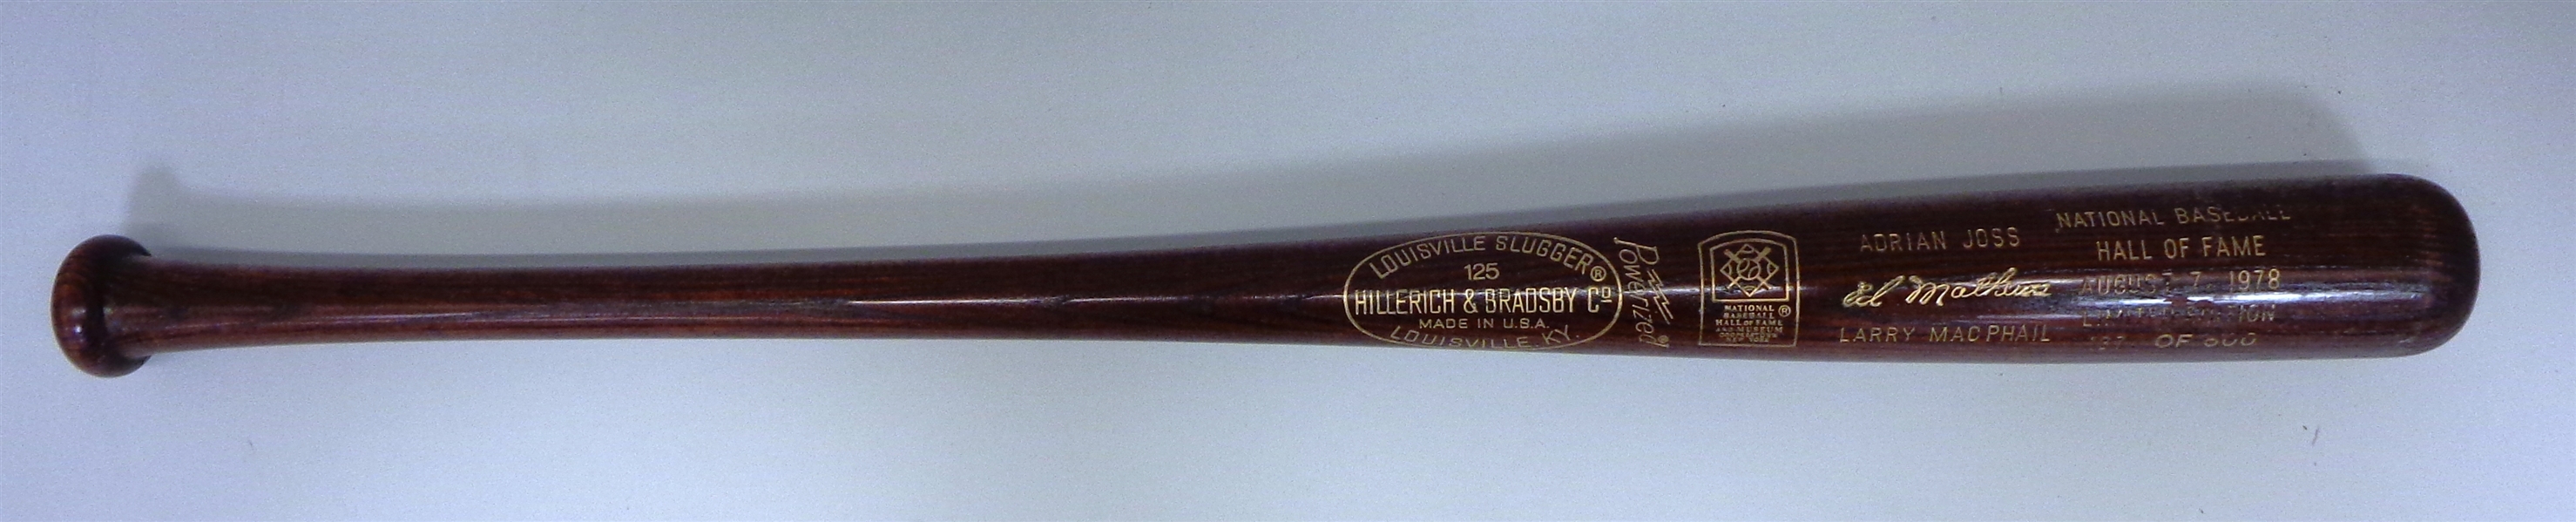 1978 Baseball Hall of Fame Commemorative Bat